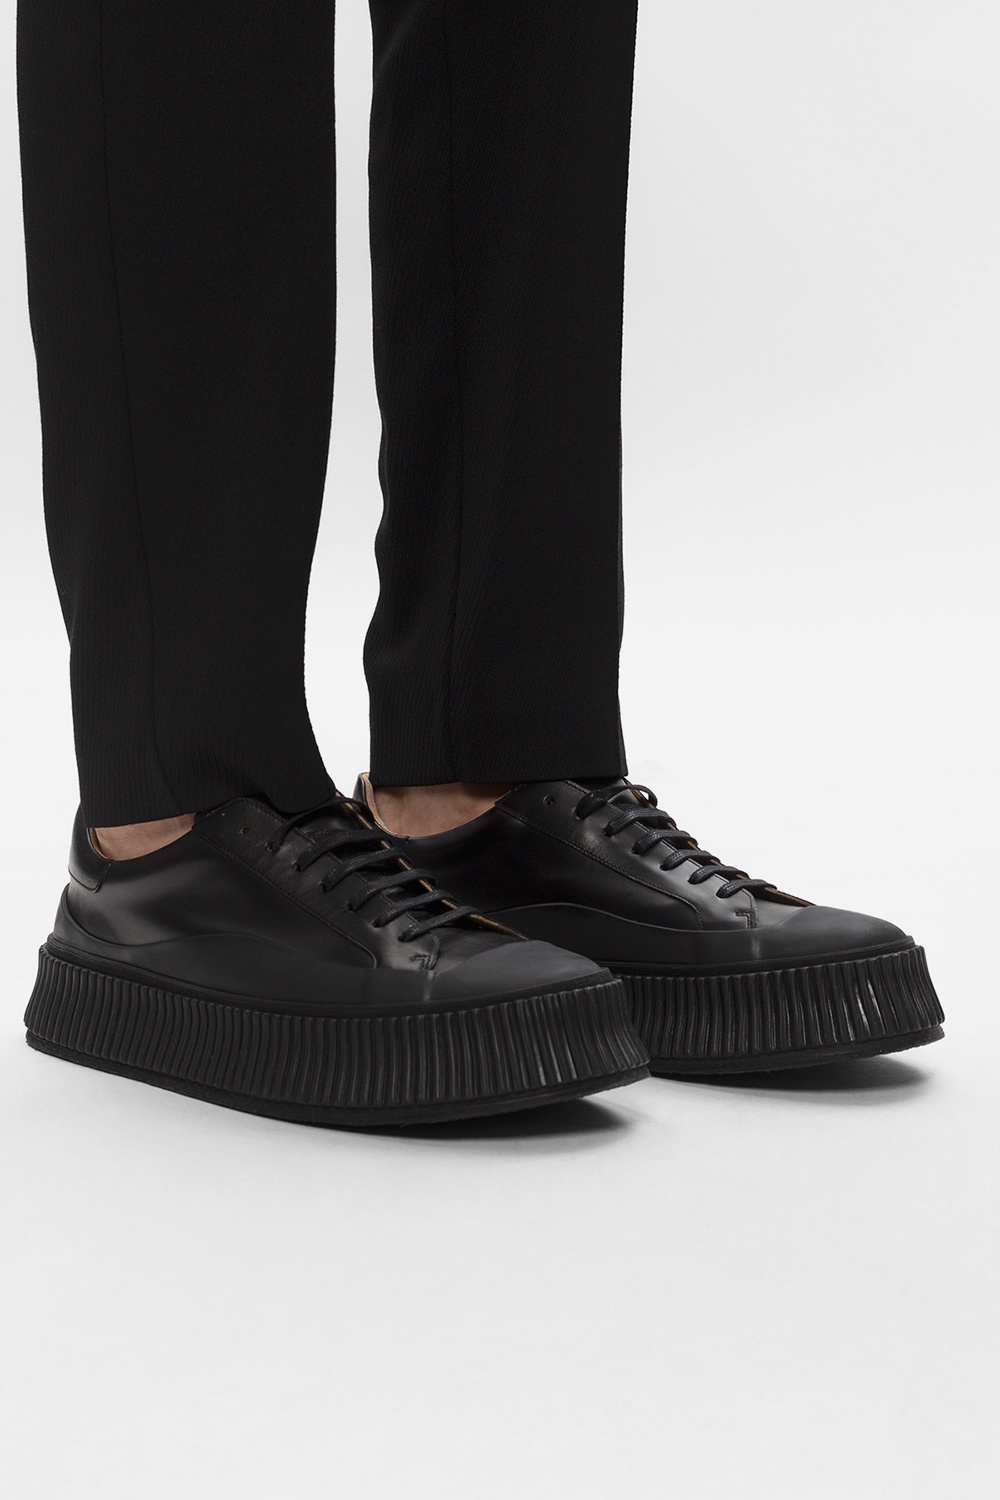 JIL SANDER+ sneakers | Men's Shoes |